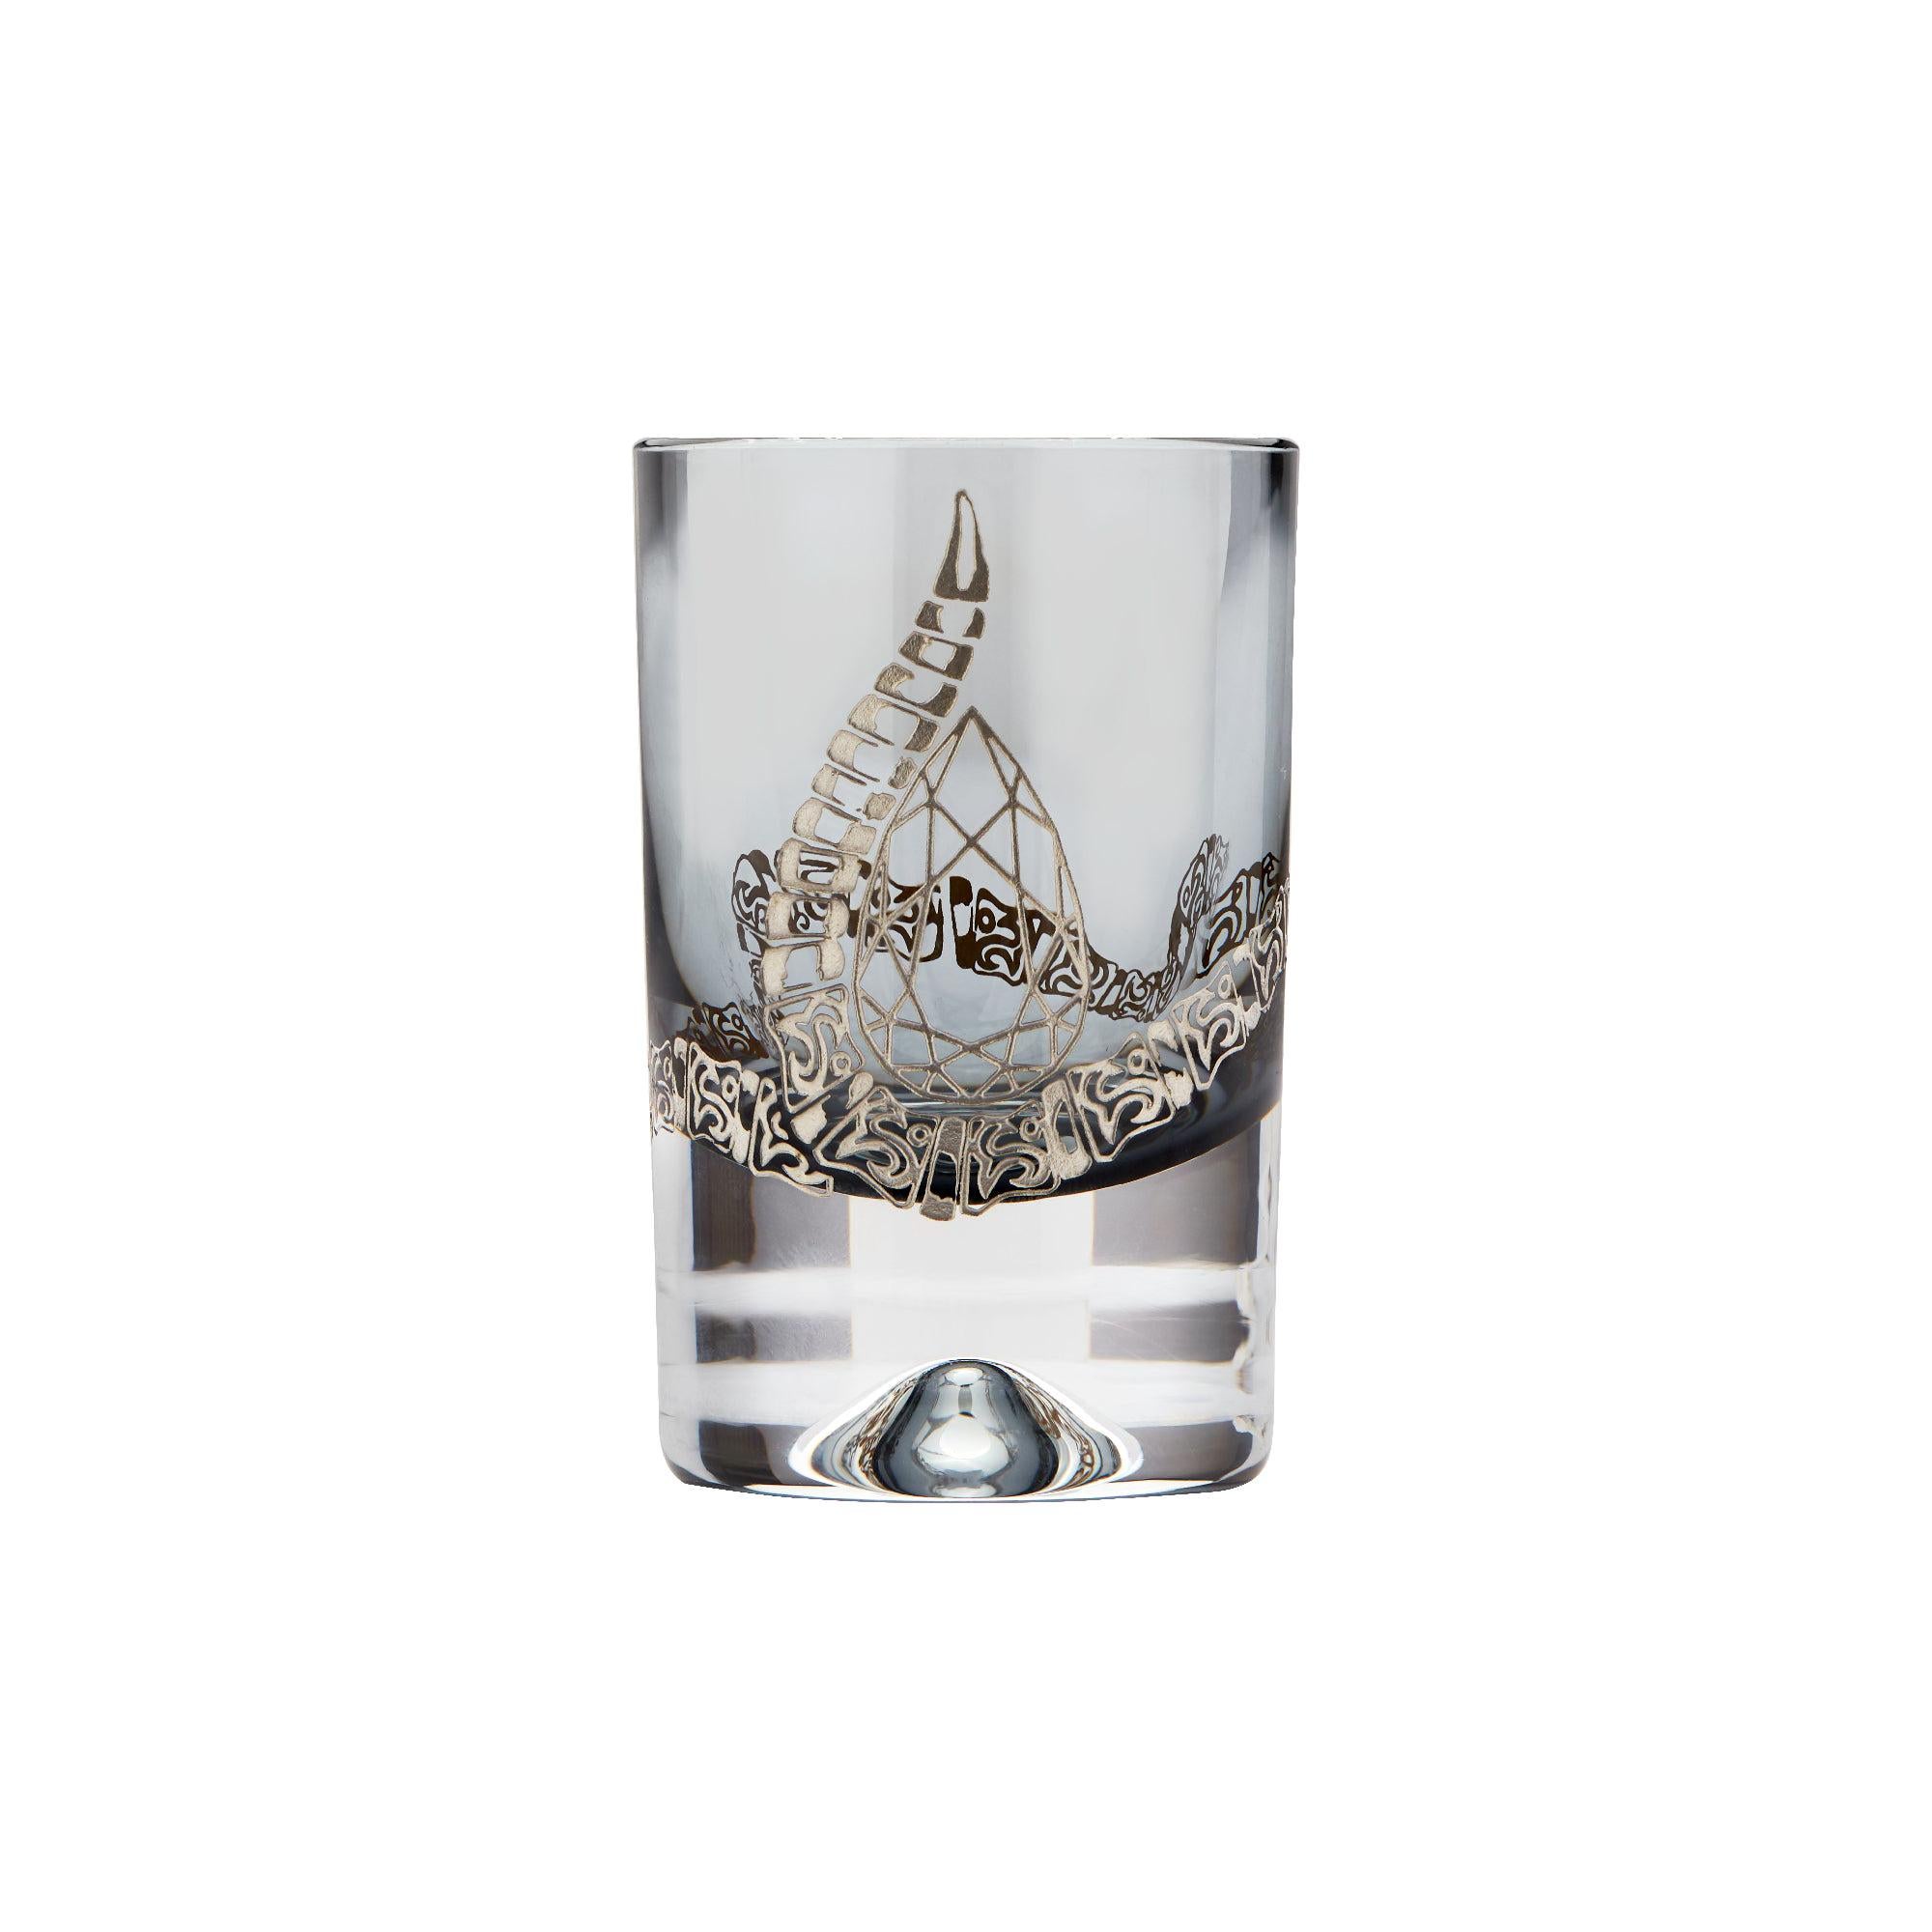 Stephen Webster Tequila Lore Rattlesnake Engraved Smoke Shot Glass - Set of 2 For Sale